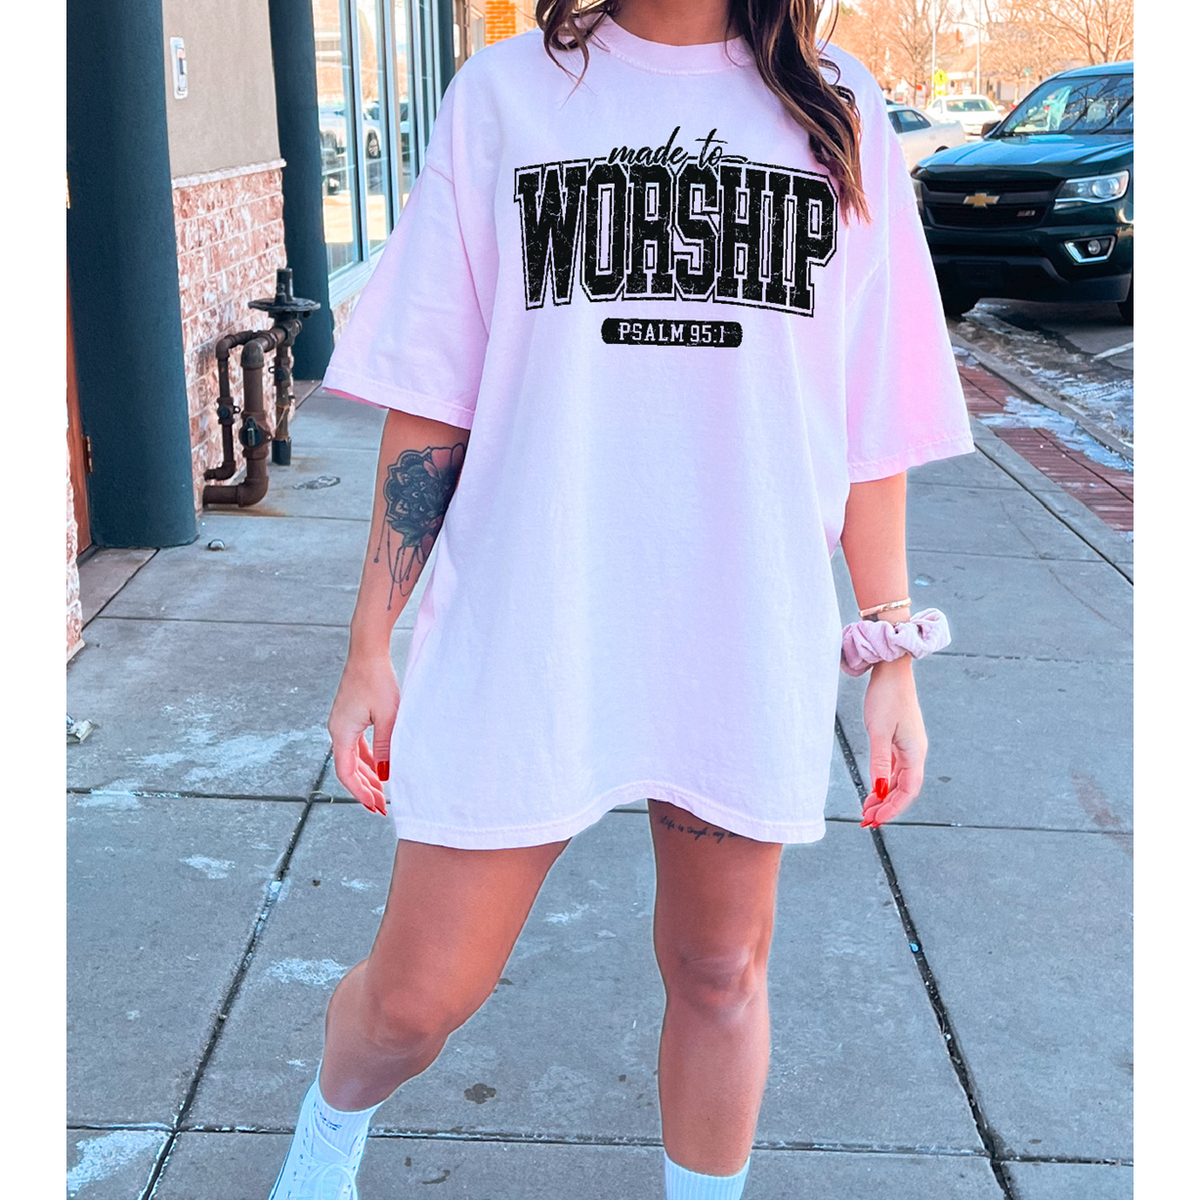 Made to Worship Christian tee or sweatshirt